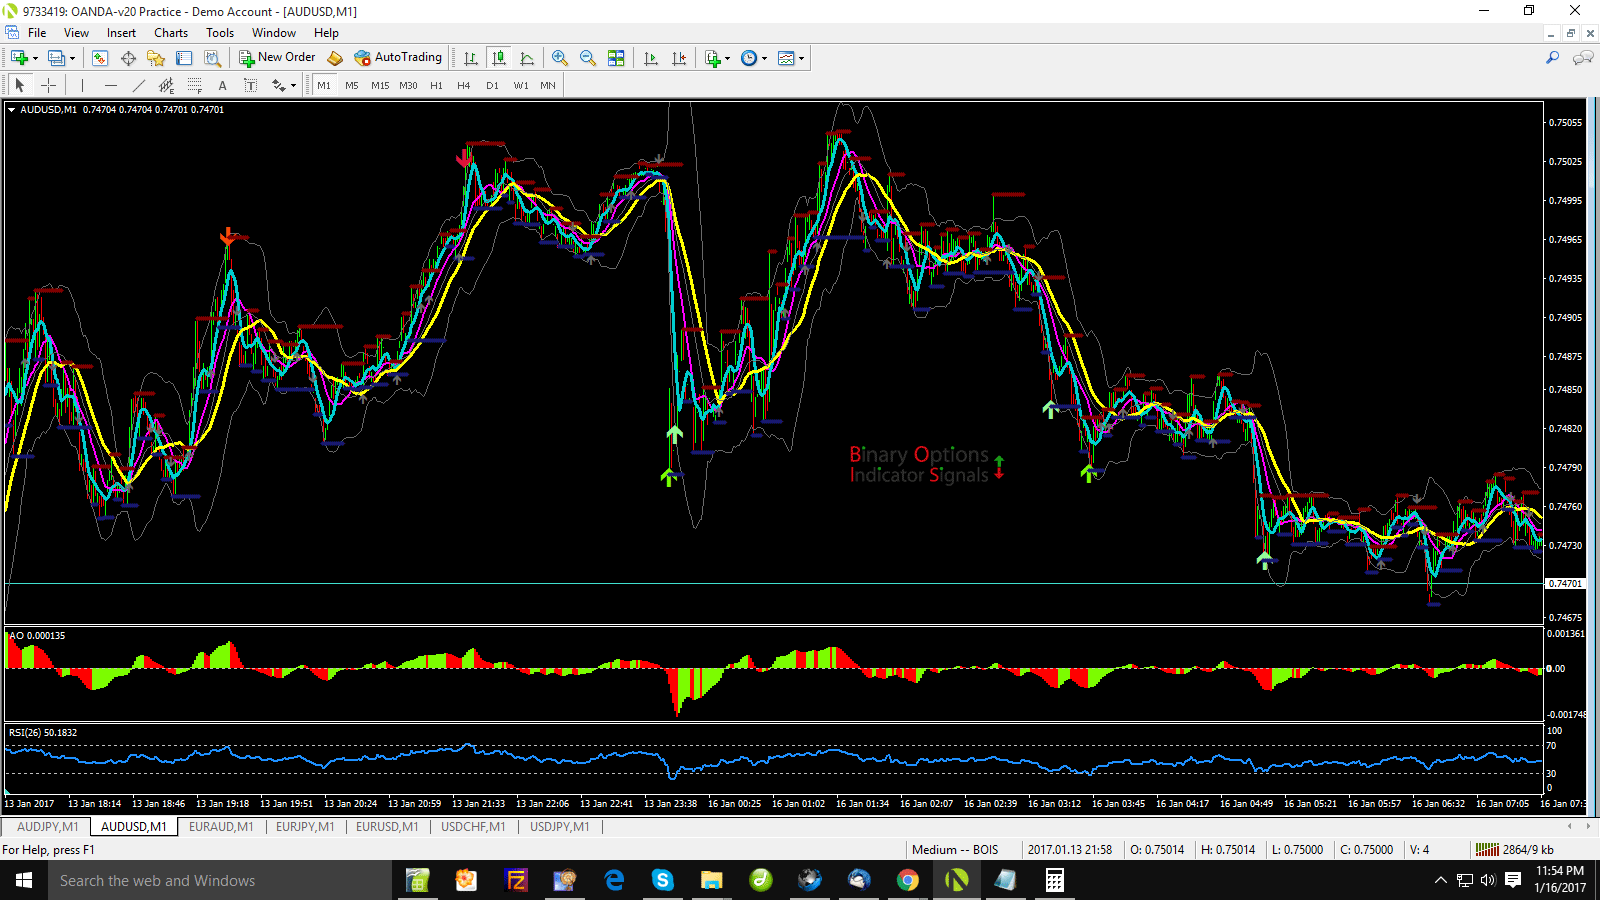 Binary options trading signals mt4